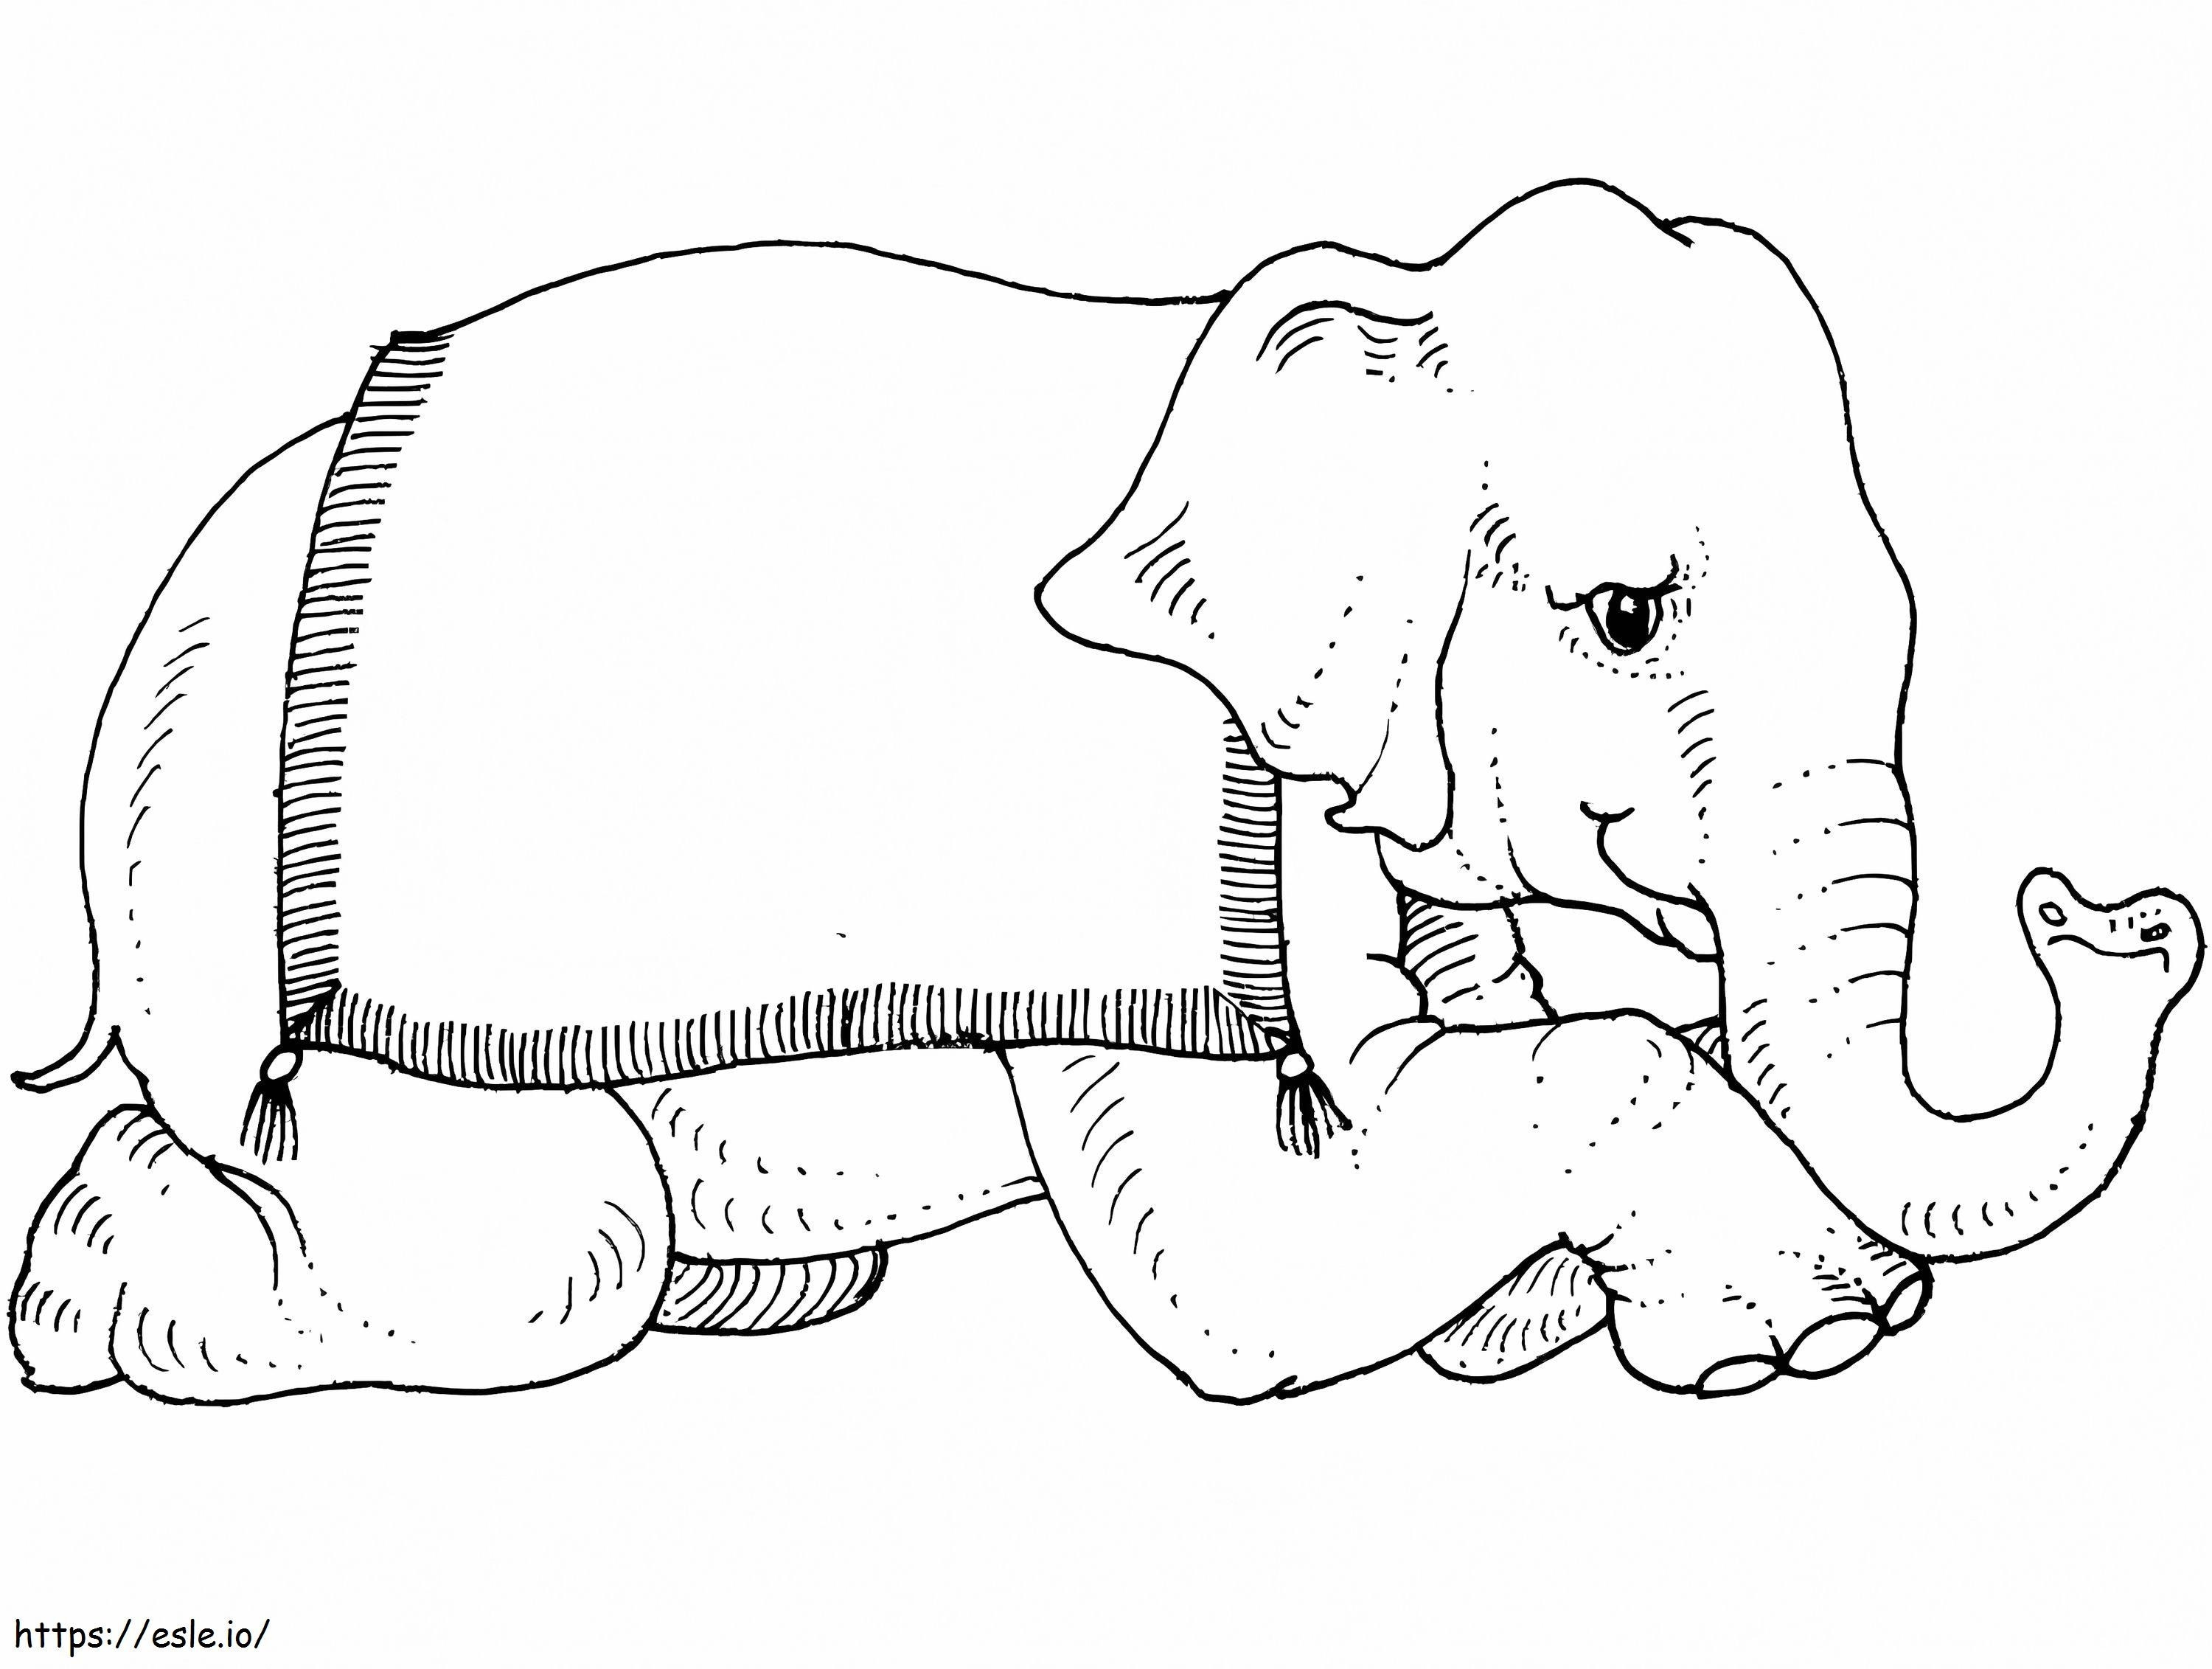 Elefante de circo para colorear